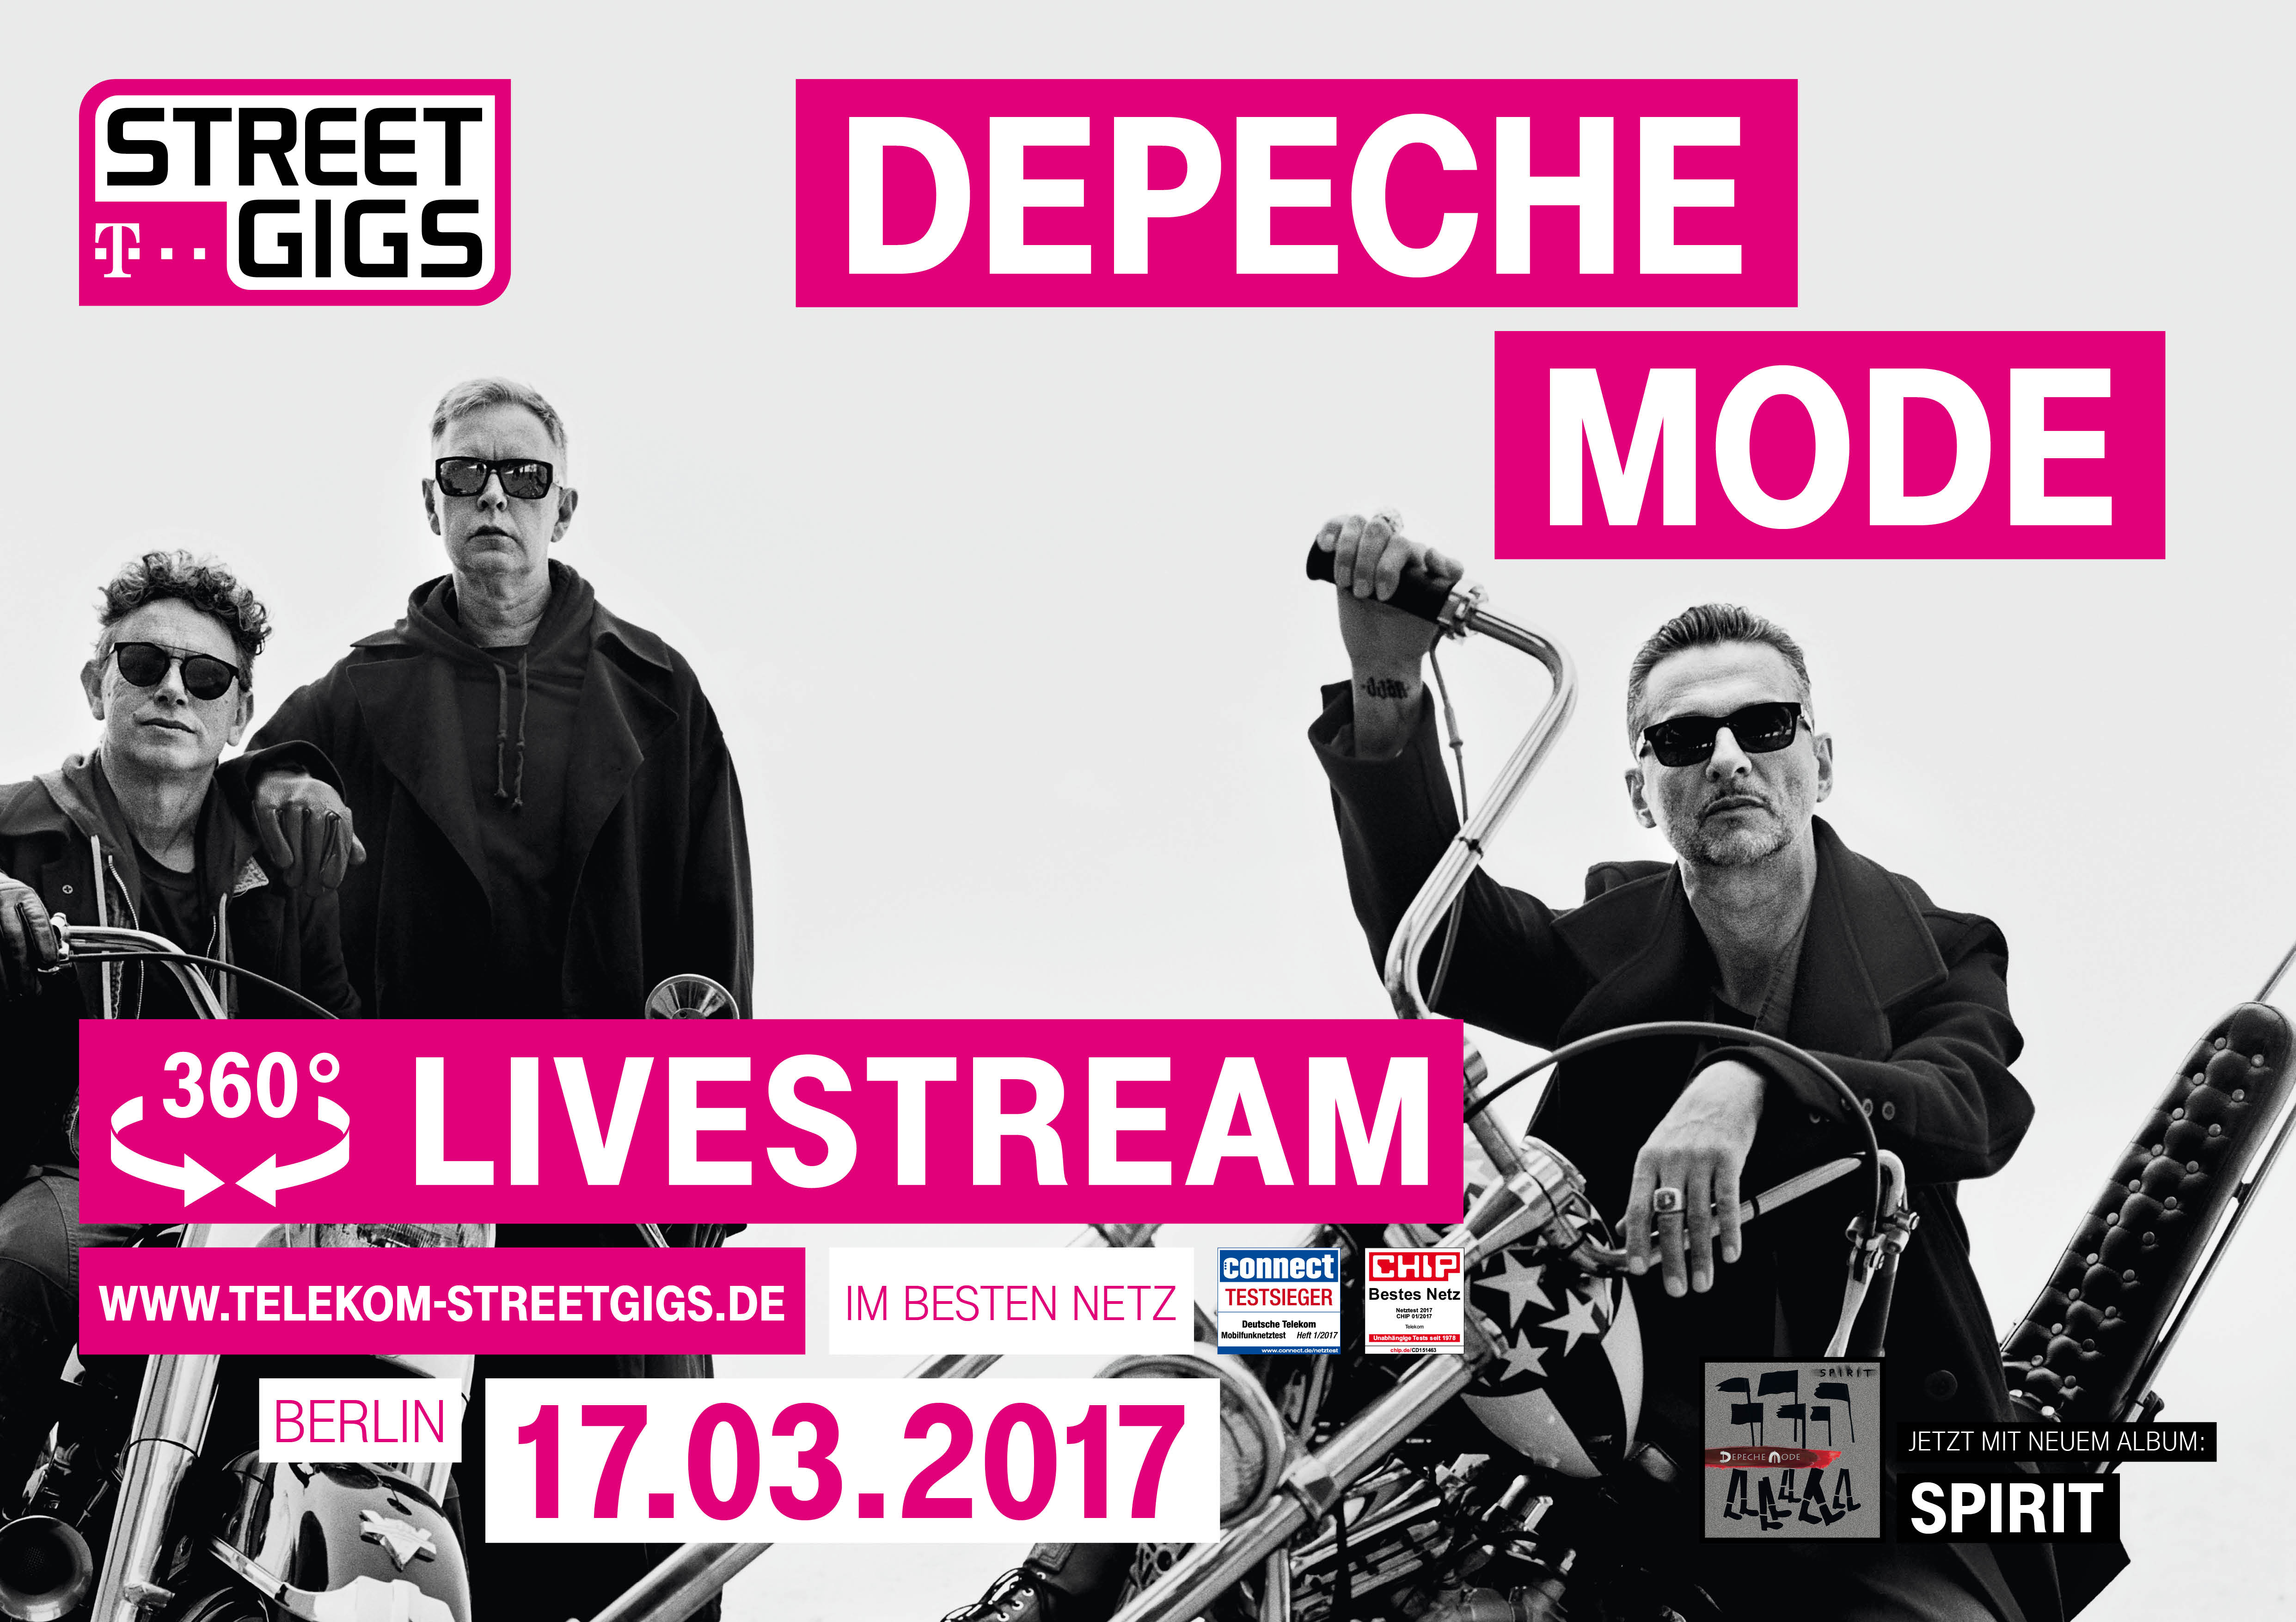 Telekom Street Gigs Depeche Mode in Berlin marcsfirma